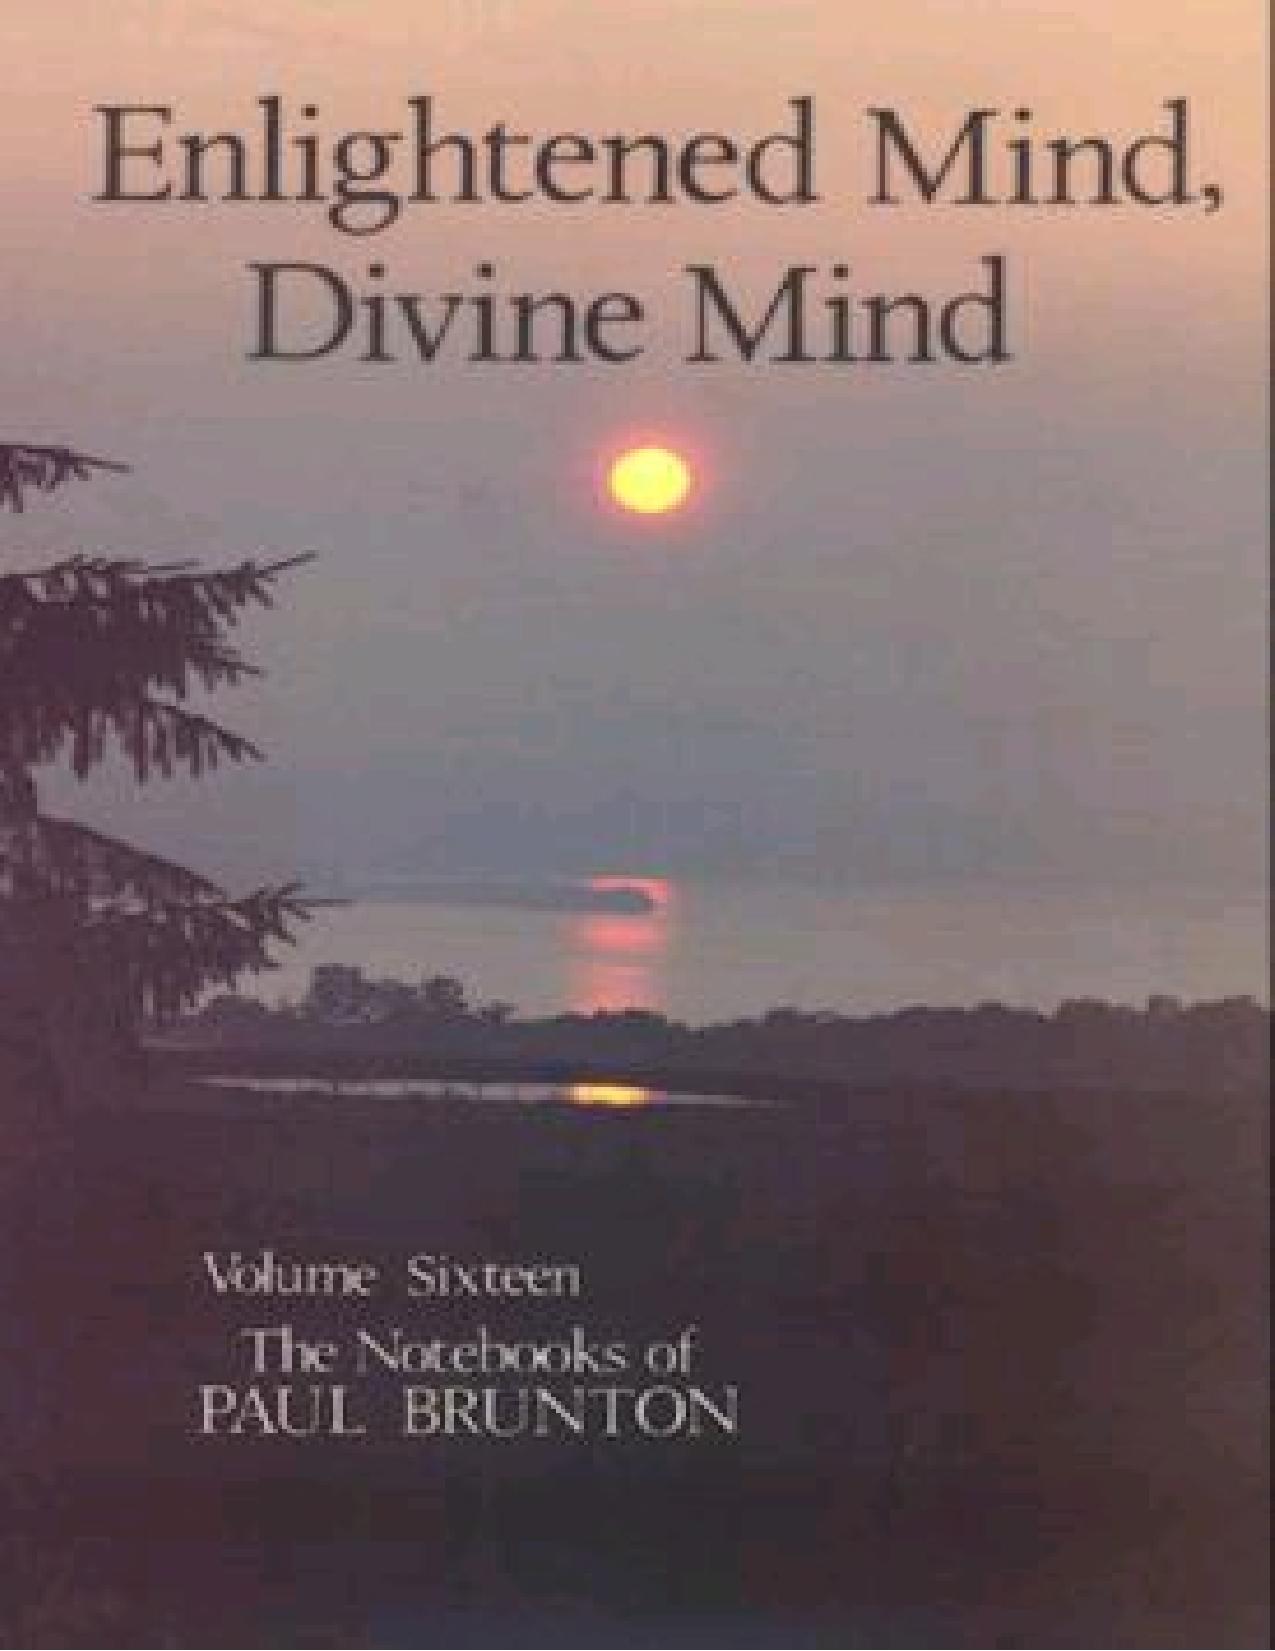 16 - Enlightened Mind, Divine Mind by Paul Brunton